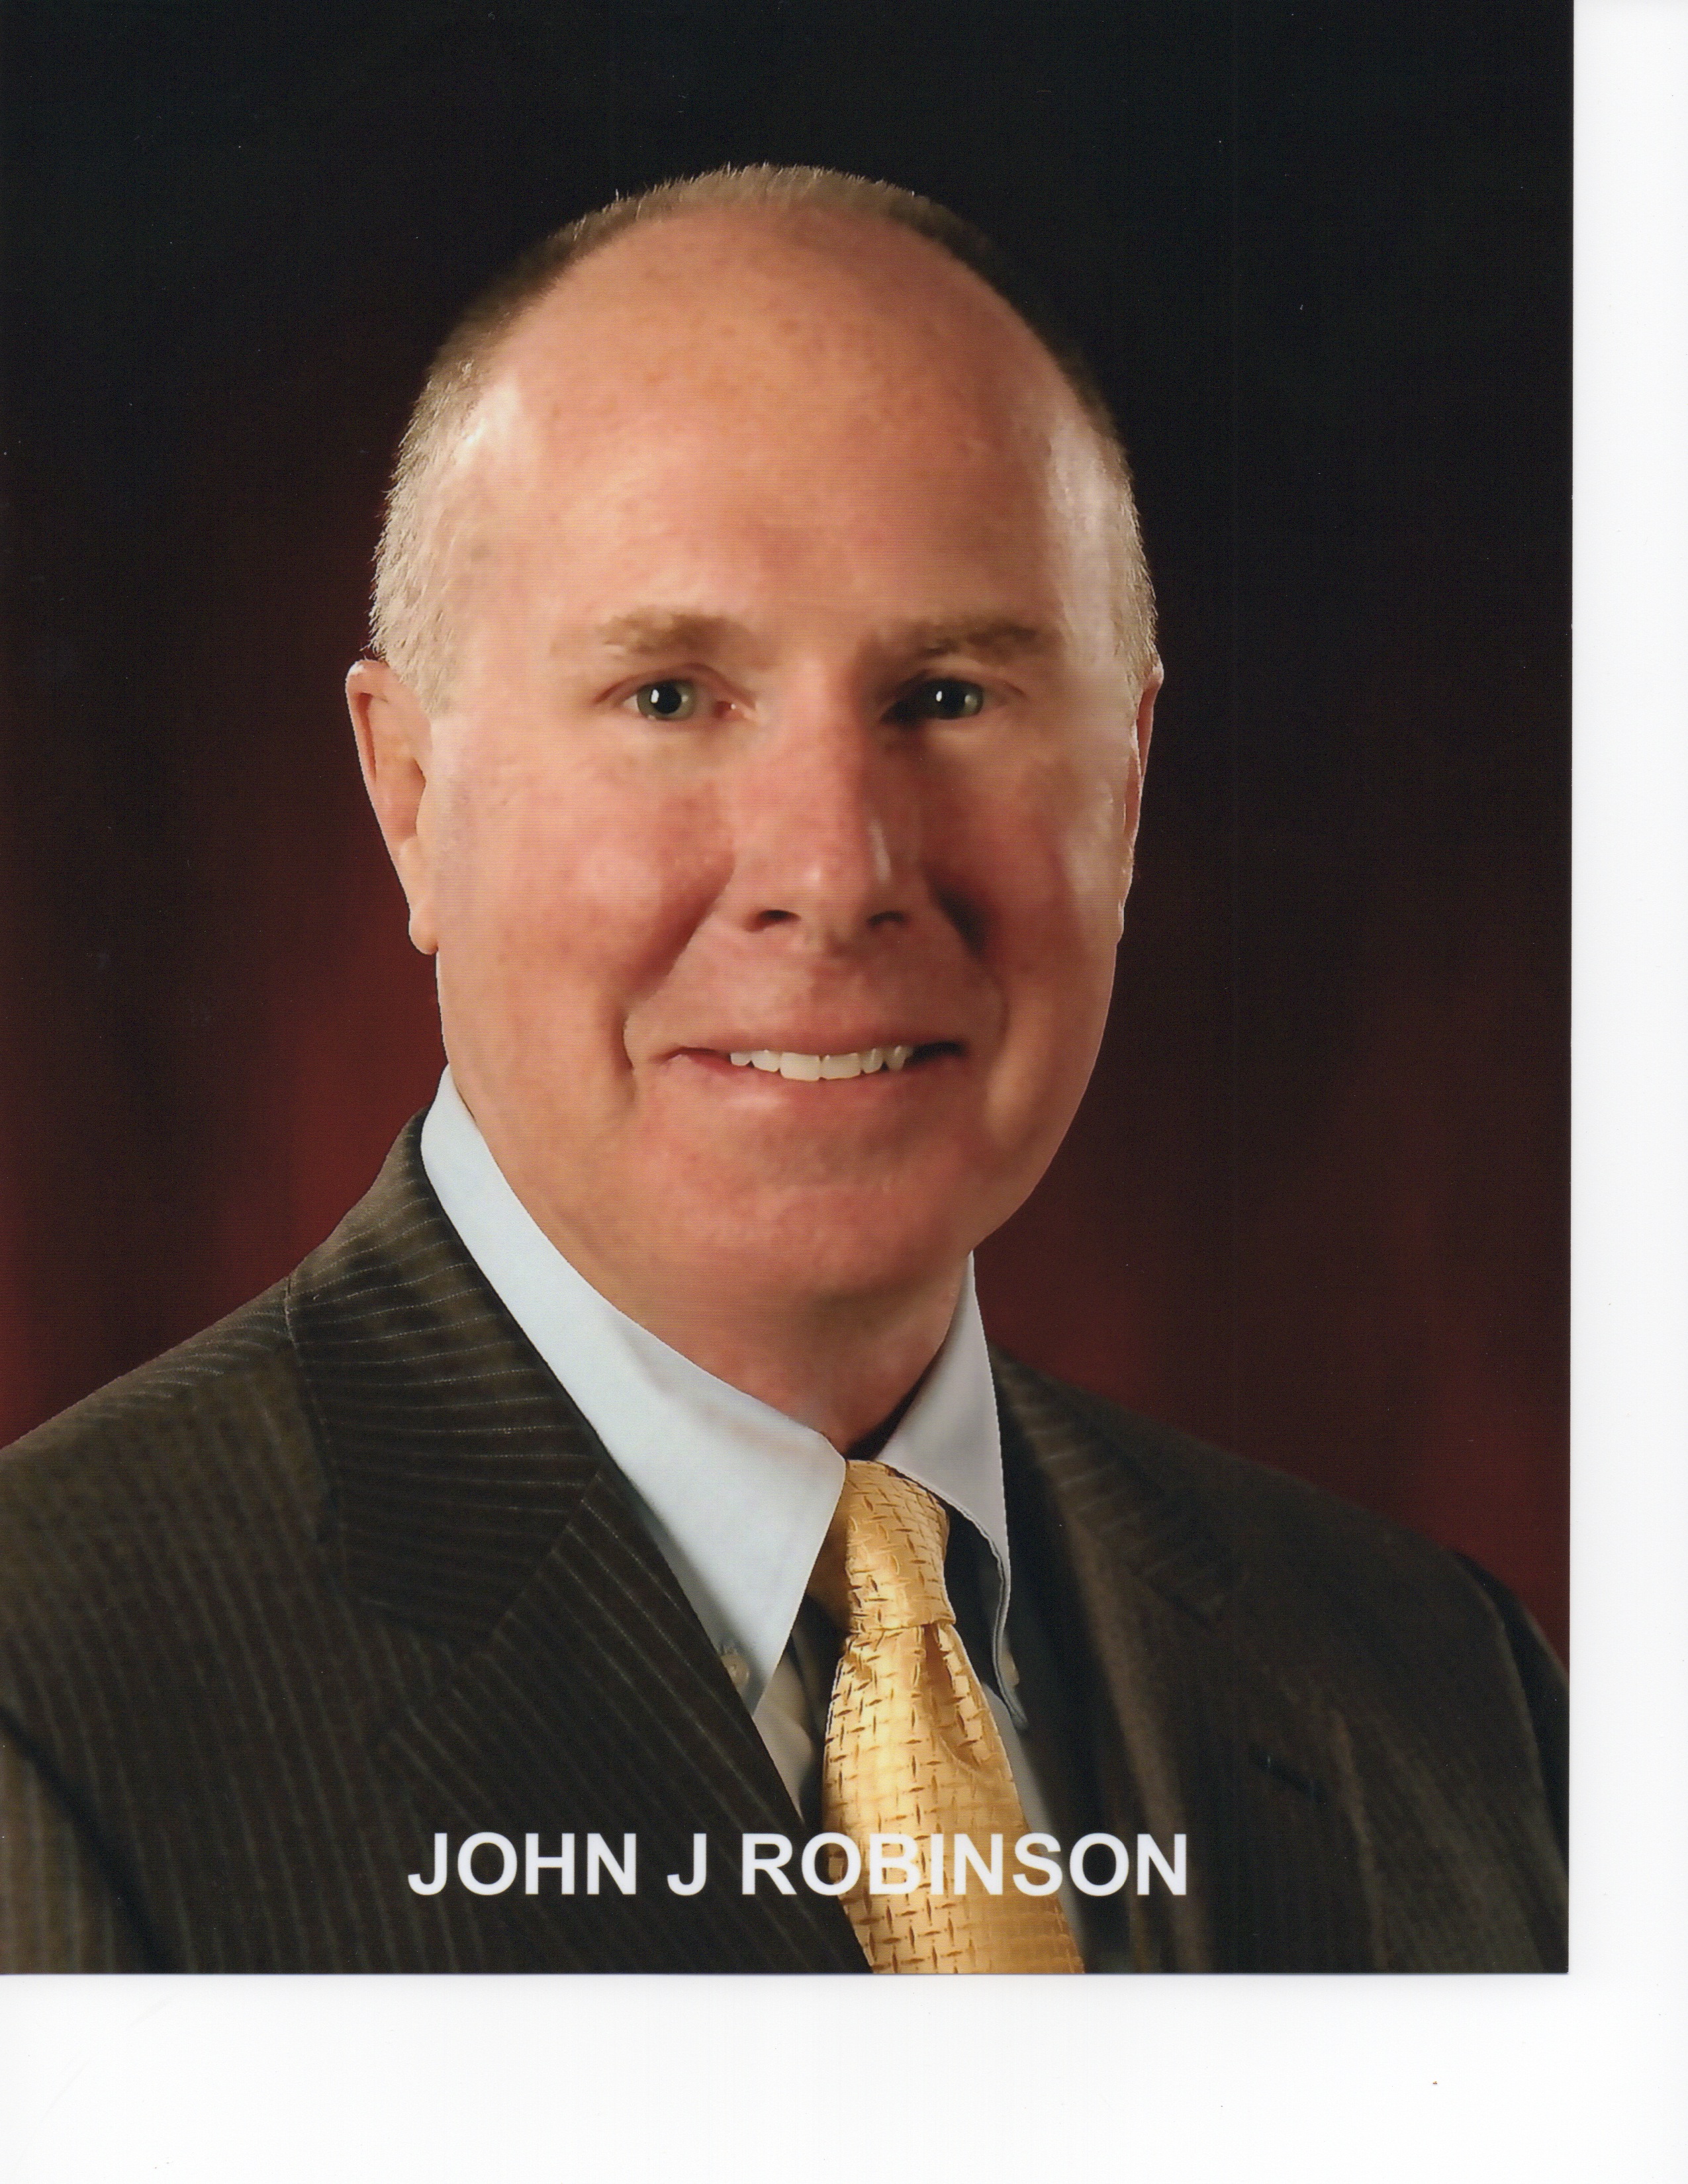 John J. Robinson